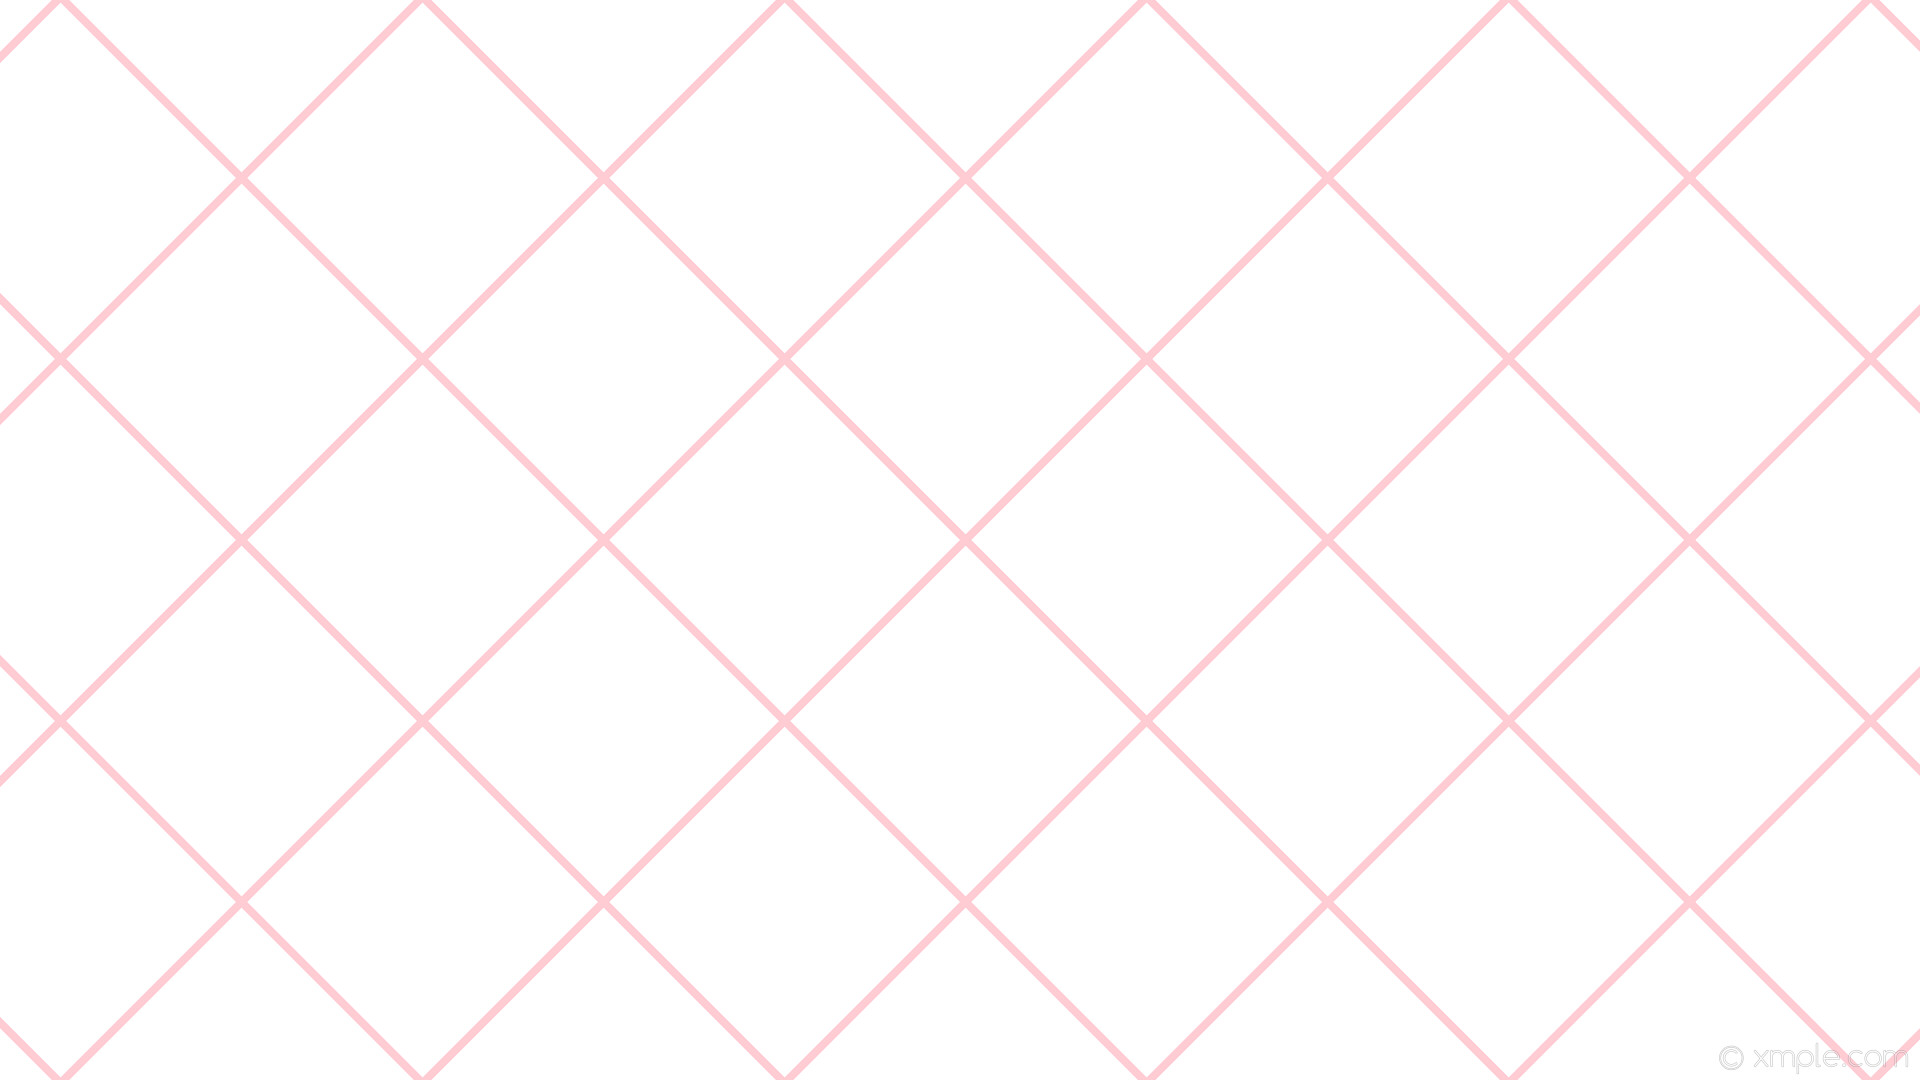 1920x1080 wallpaper graph paper pink white grid light pink #ffffff #ffb6c1 45Â° 8px  256px